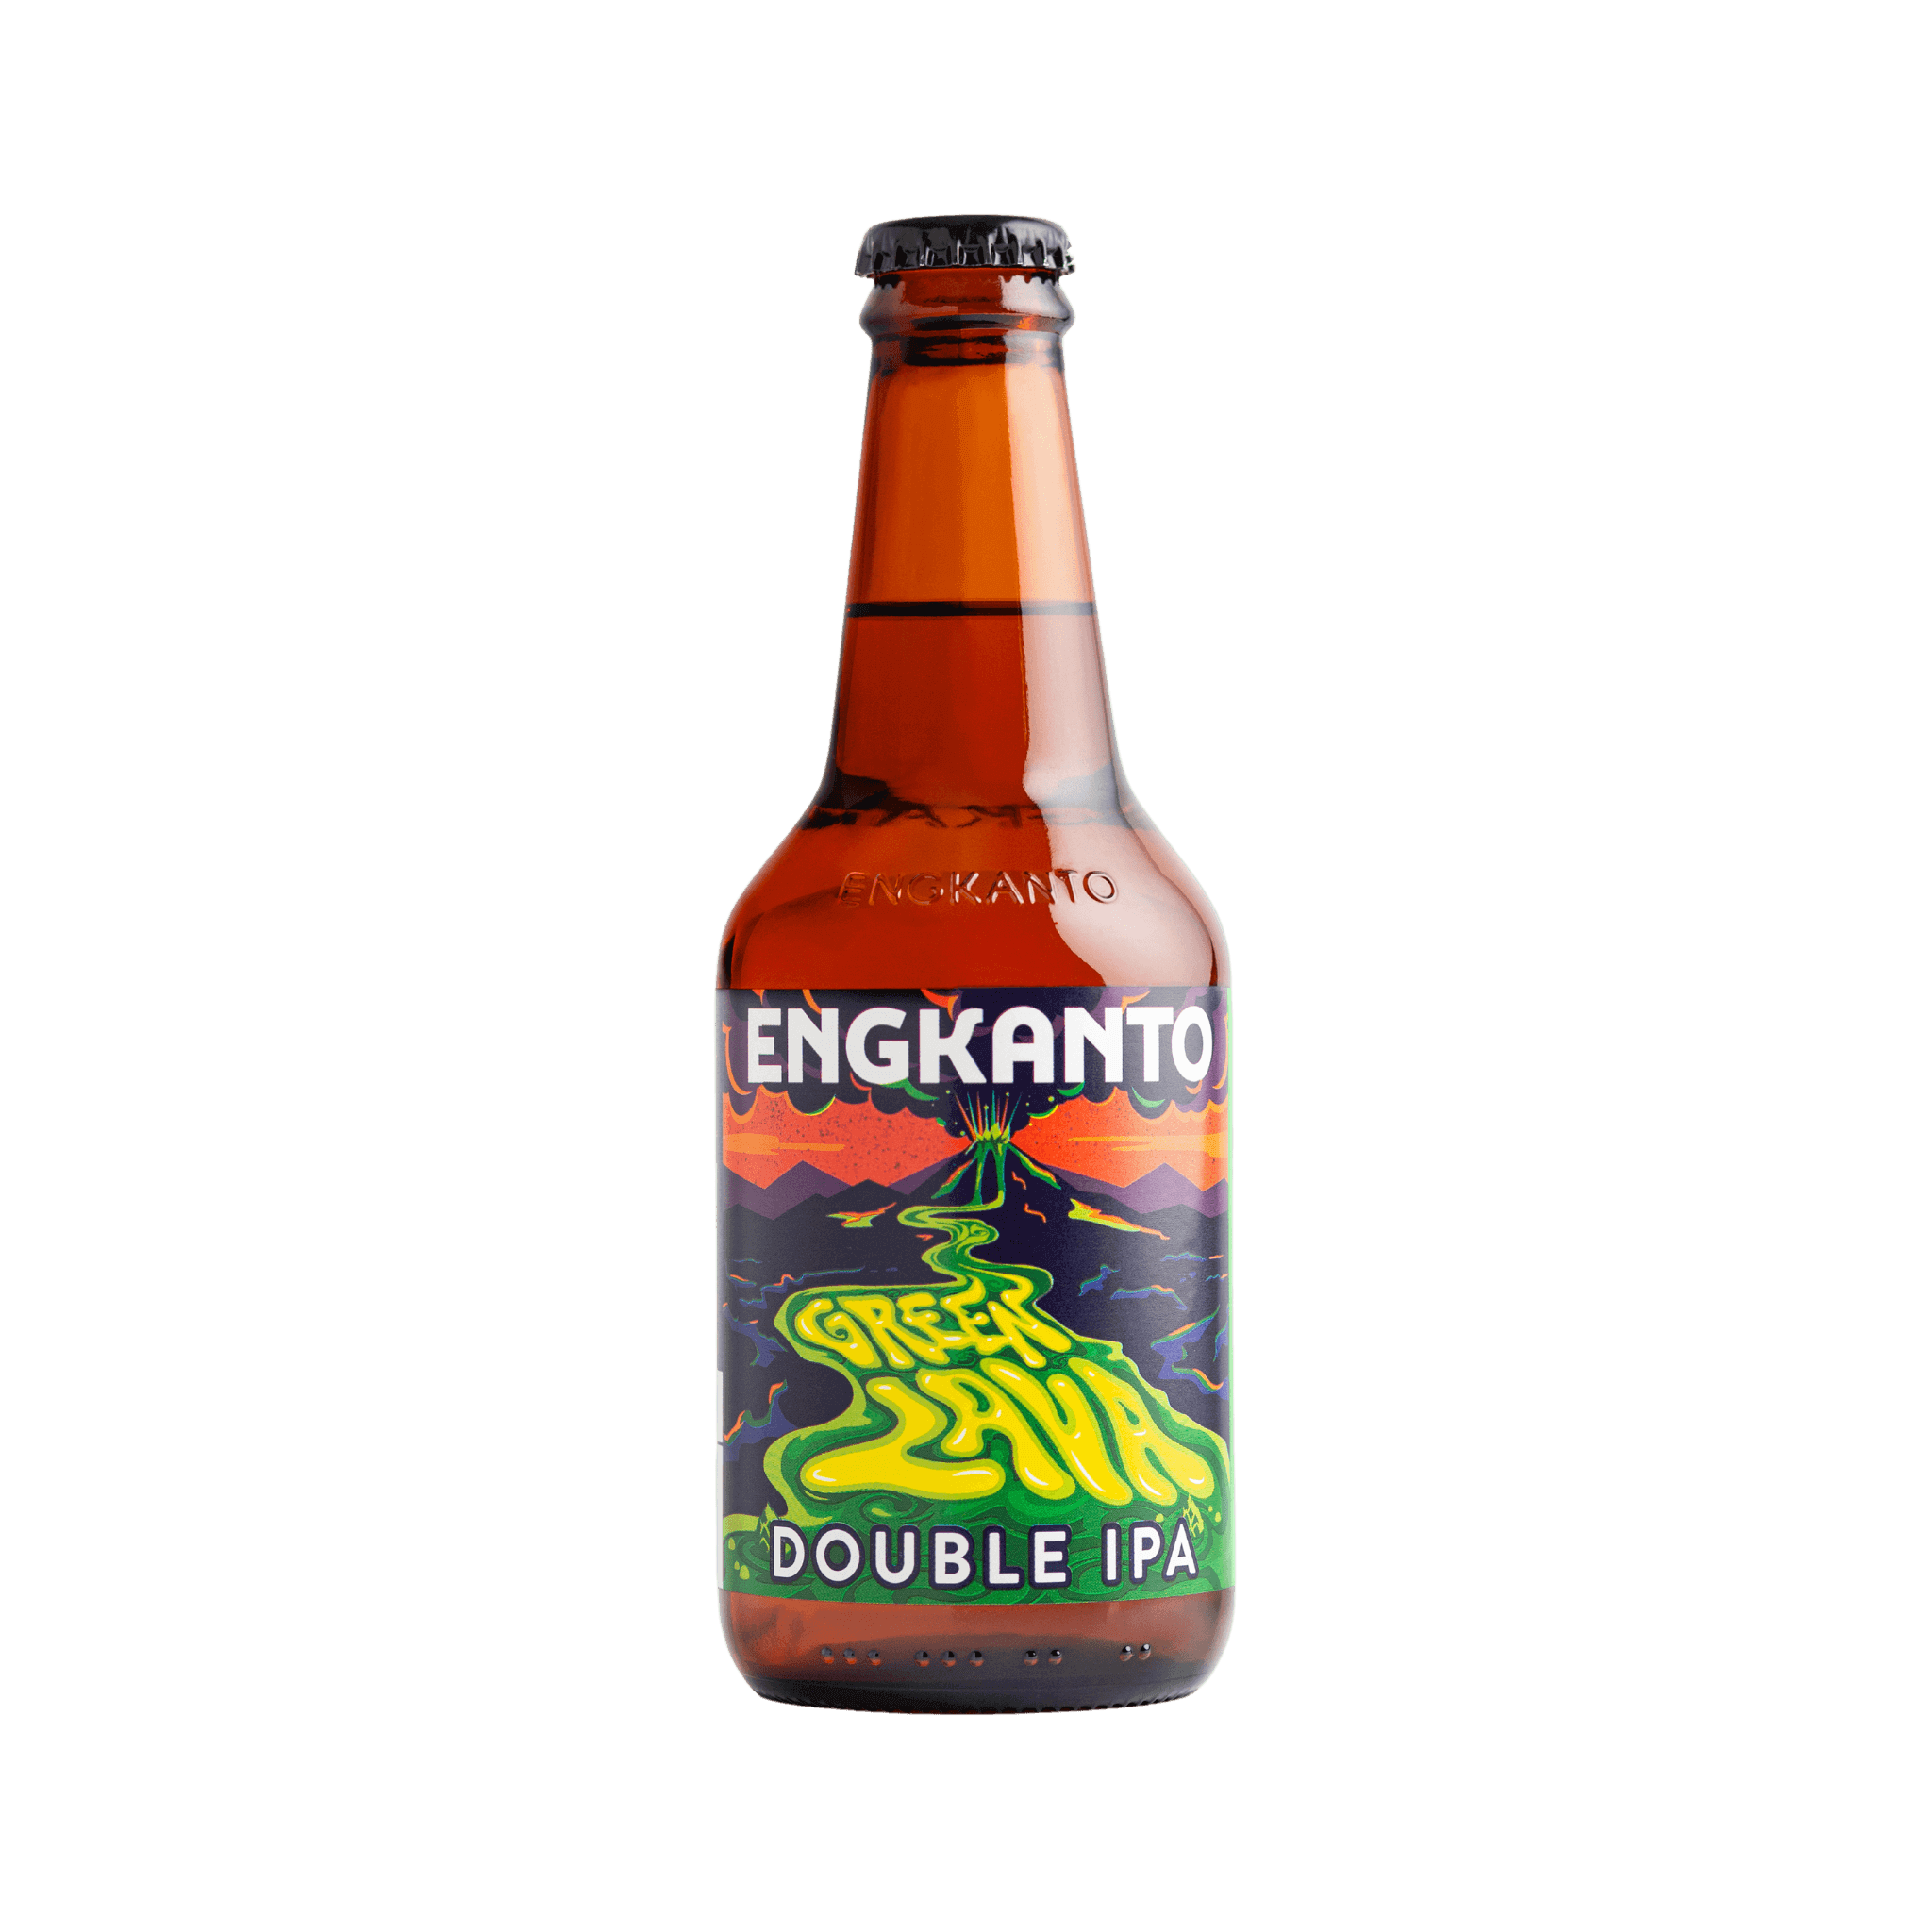 Engkanto Green Lava – Double IPA 330mL Bottle at ₱152.00